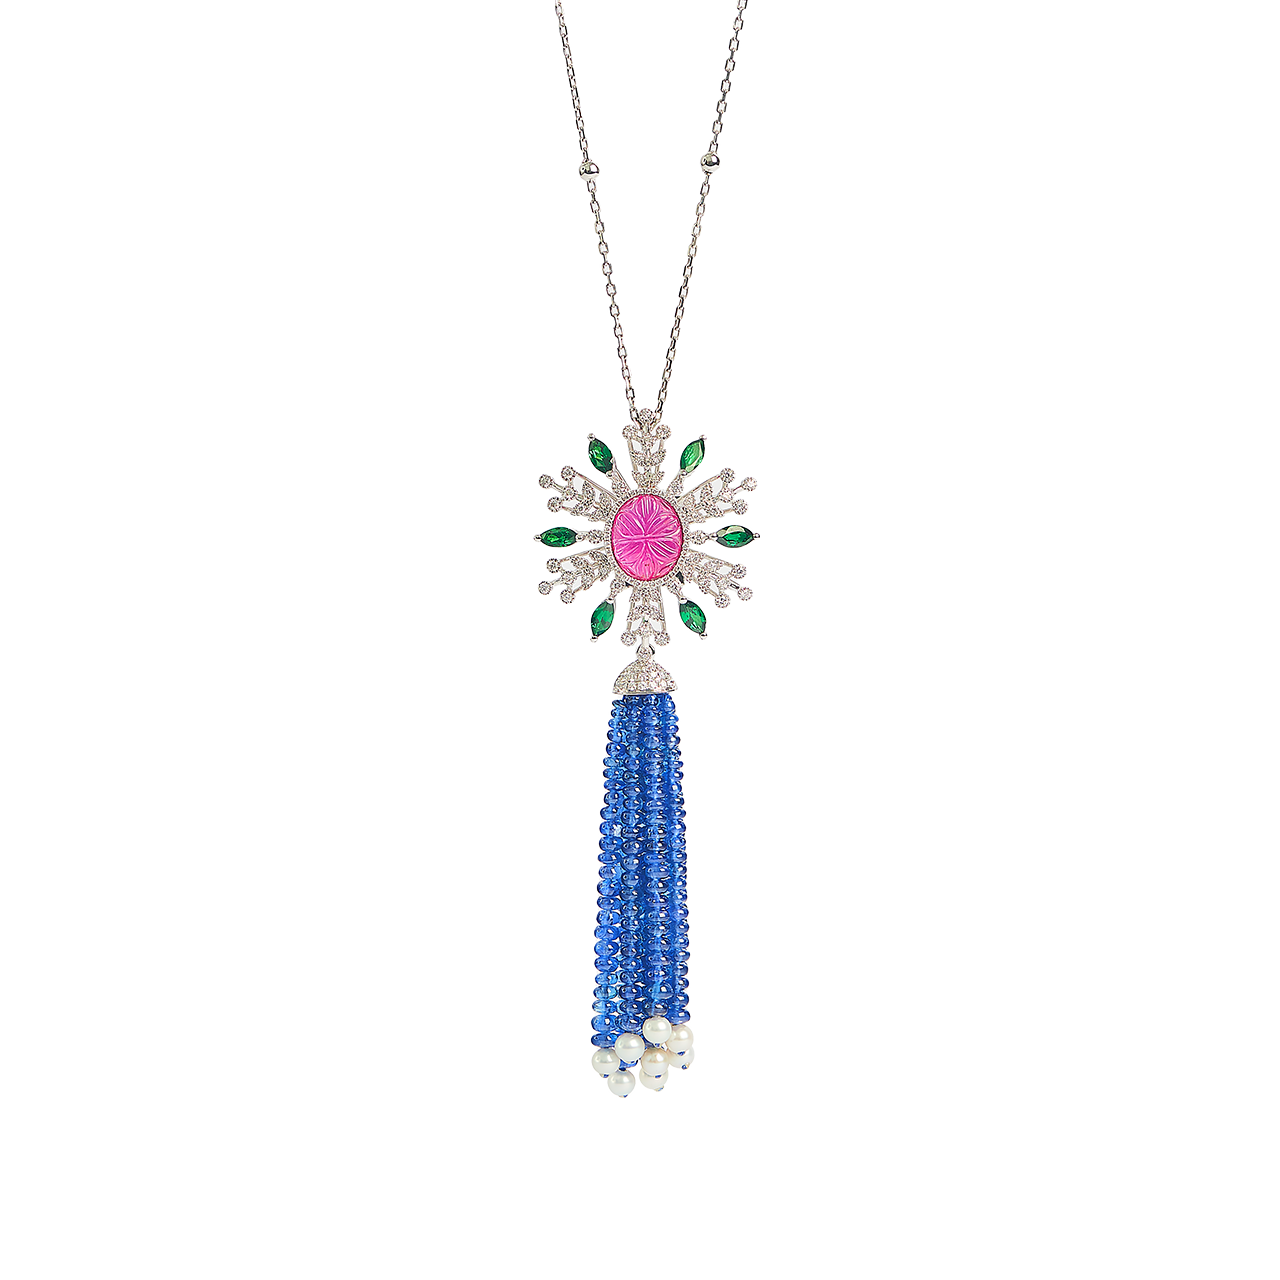 GSA 紅寶碧璽造型墜鍊 3.35克拉
Carved Rubellite, Multi -
Colored Gemstone And
Diamond Pendant Necklace